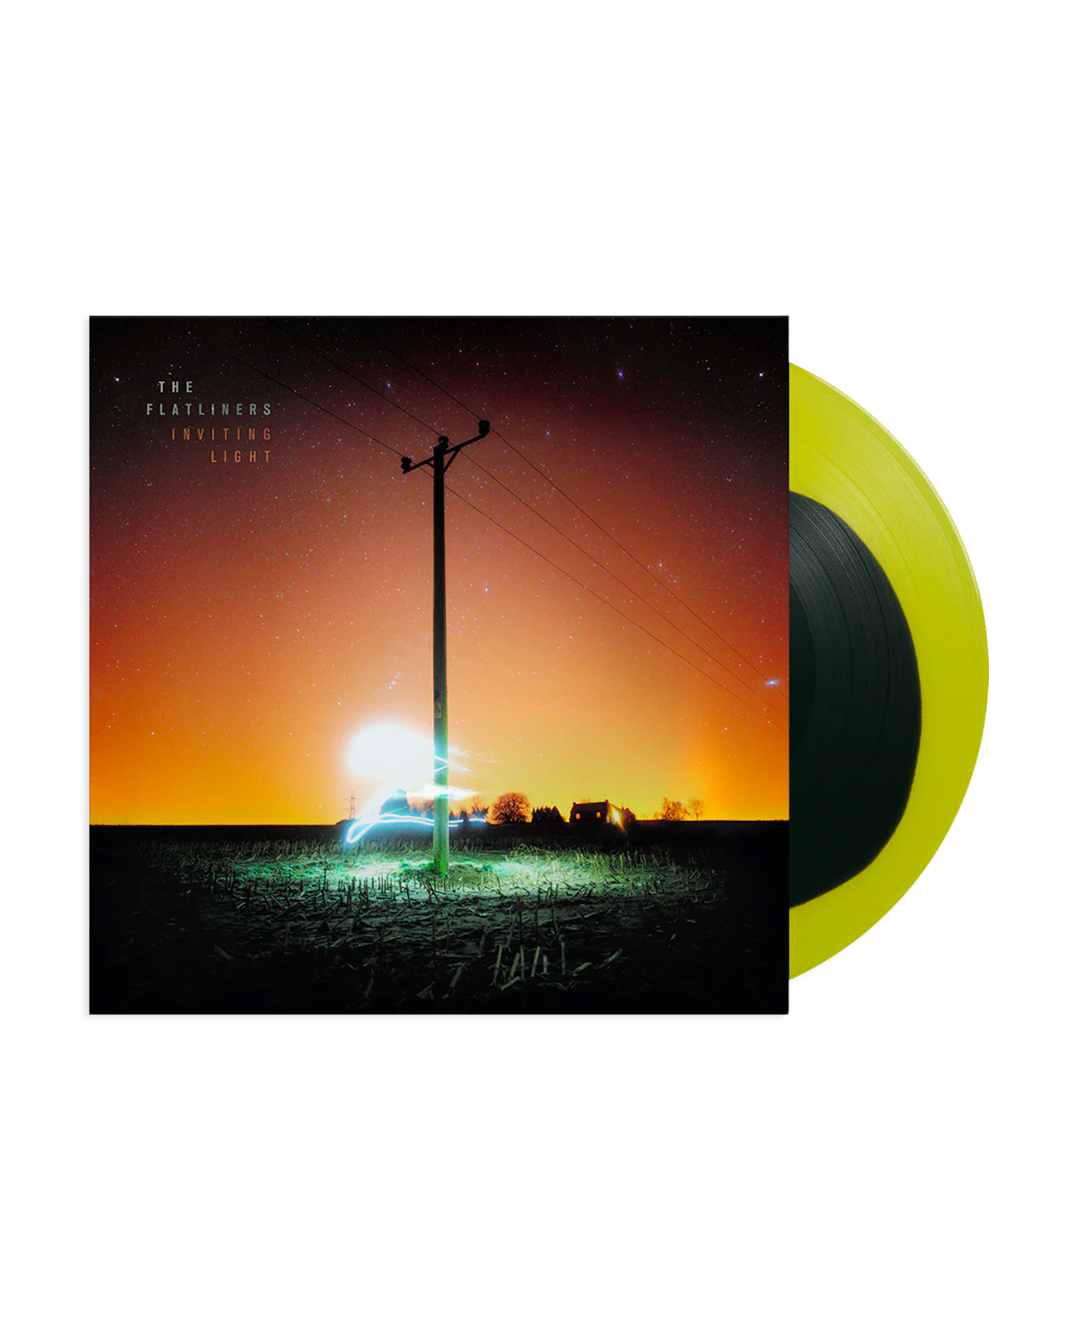 The Flatliners Inviting Light LP - Black Inside Yellow Vinyl